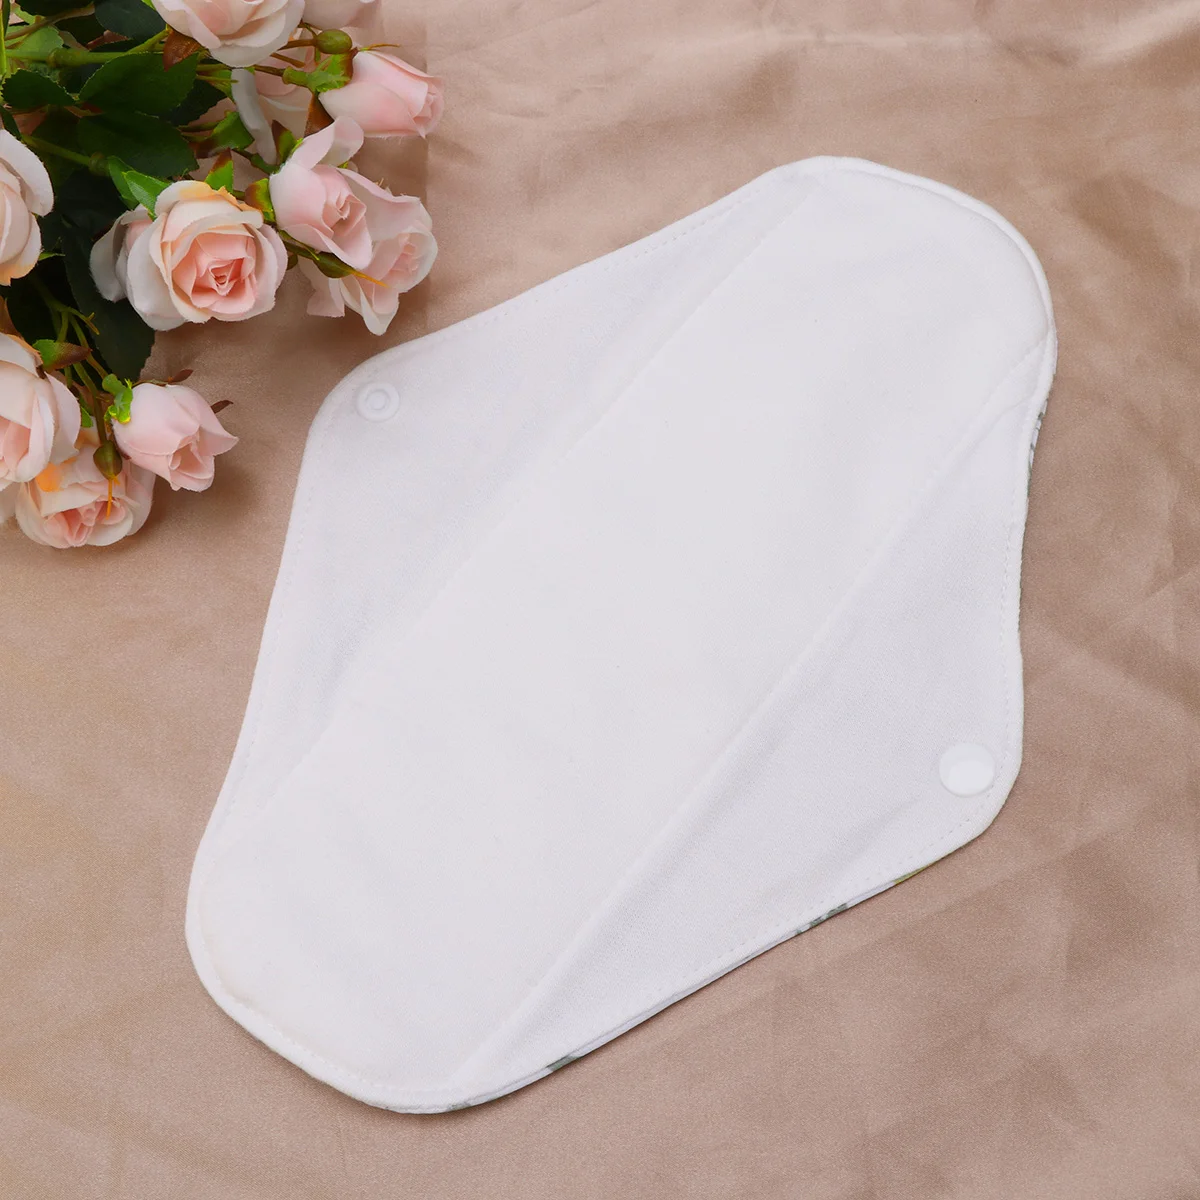 

Pads Sanitary Menstrual Panty Liners Cloth Washable Period Feminine Cotton Mama Reusable Napkin